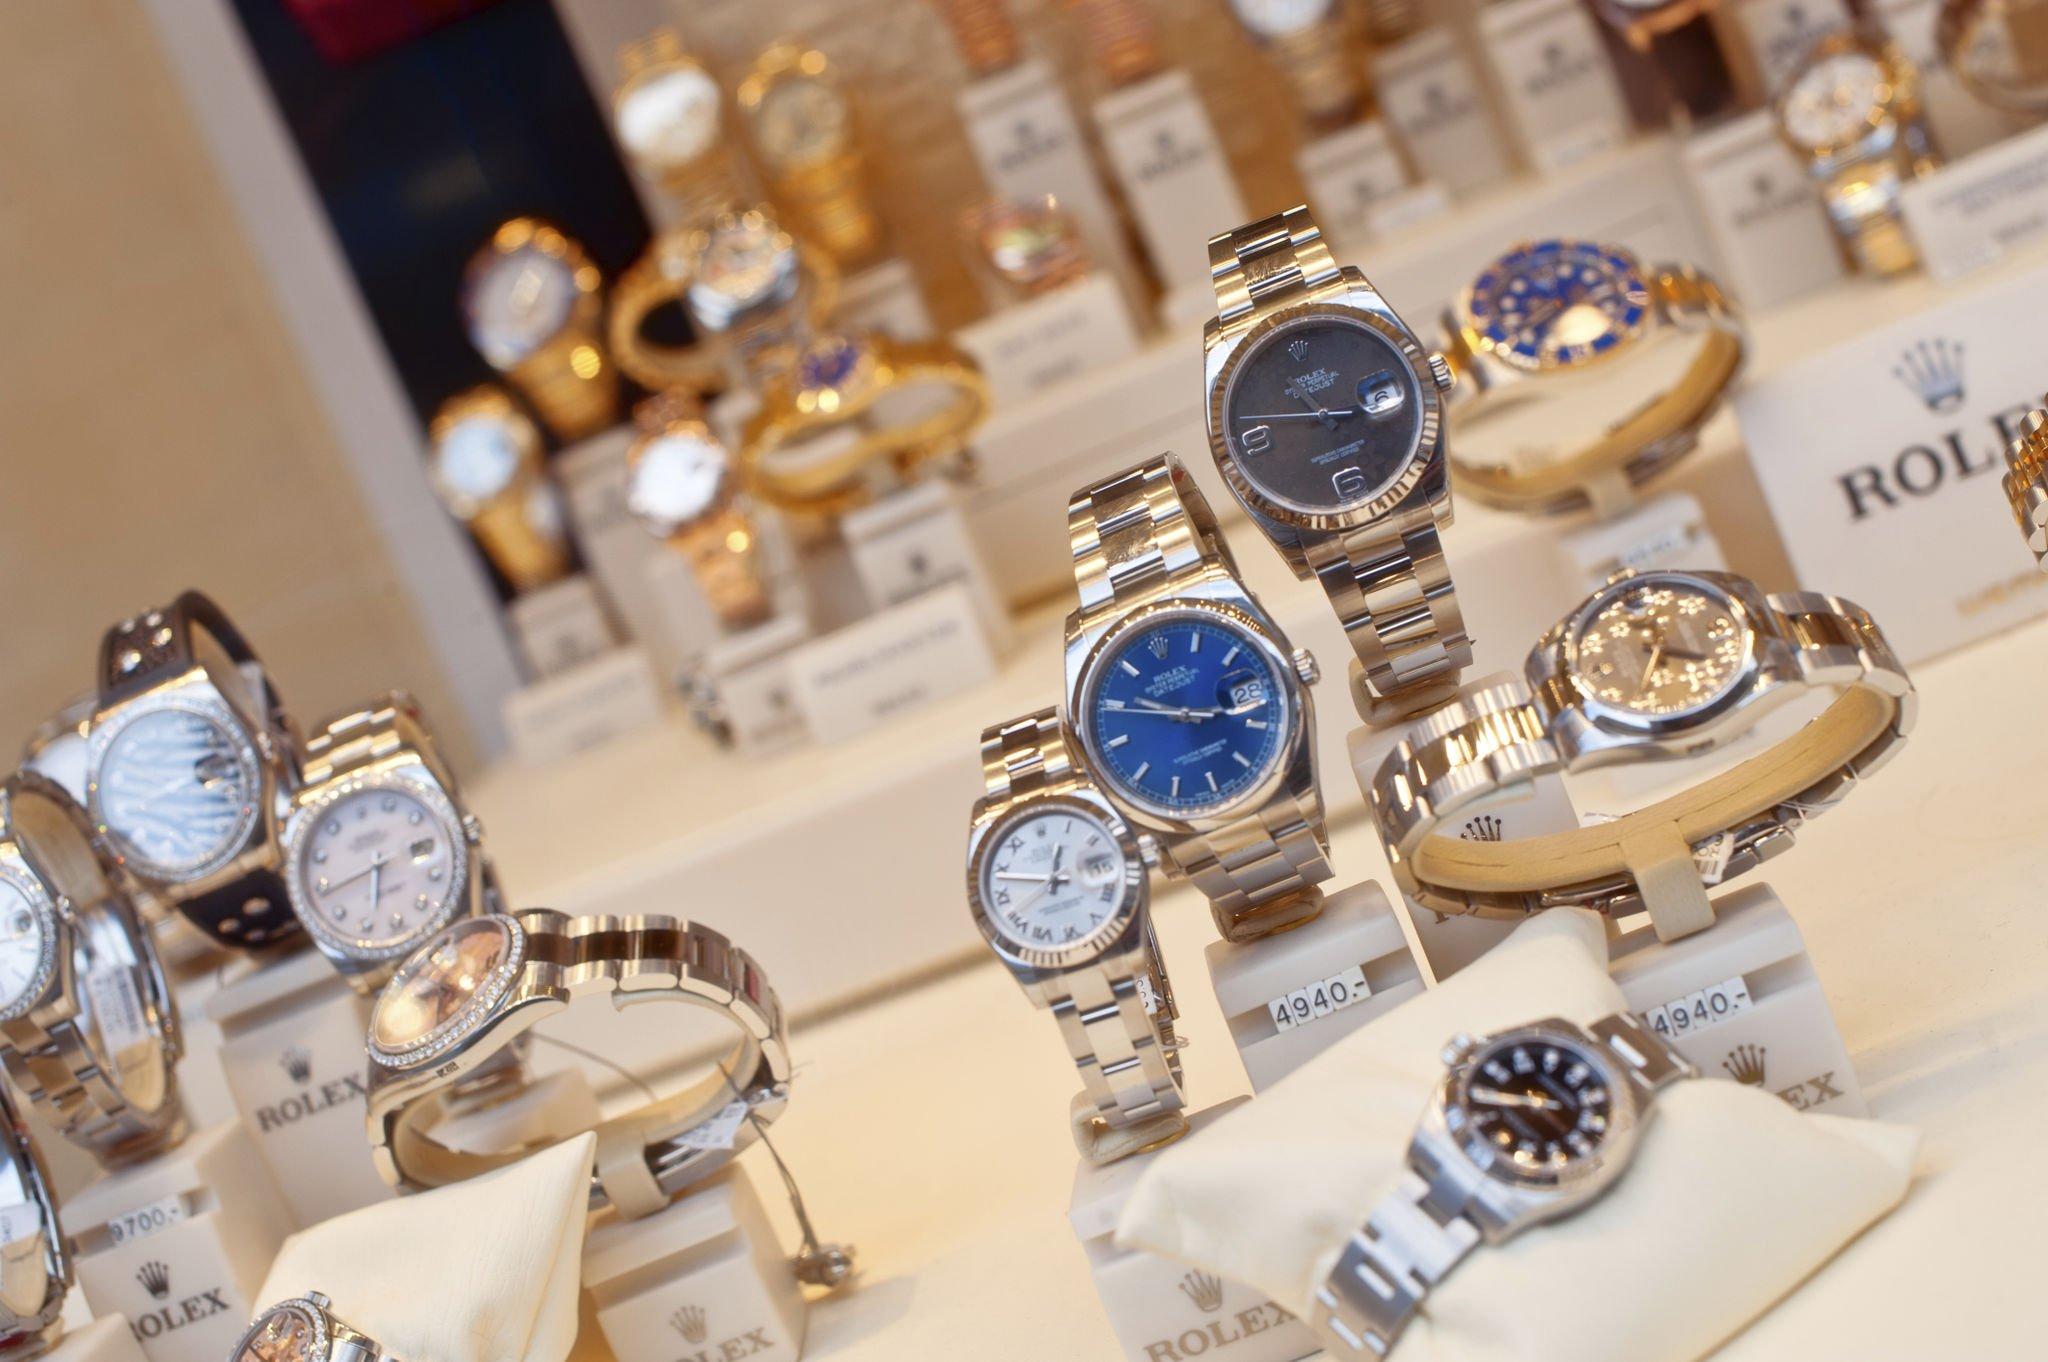 Rolex timepieces